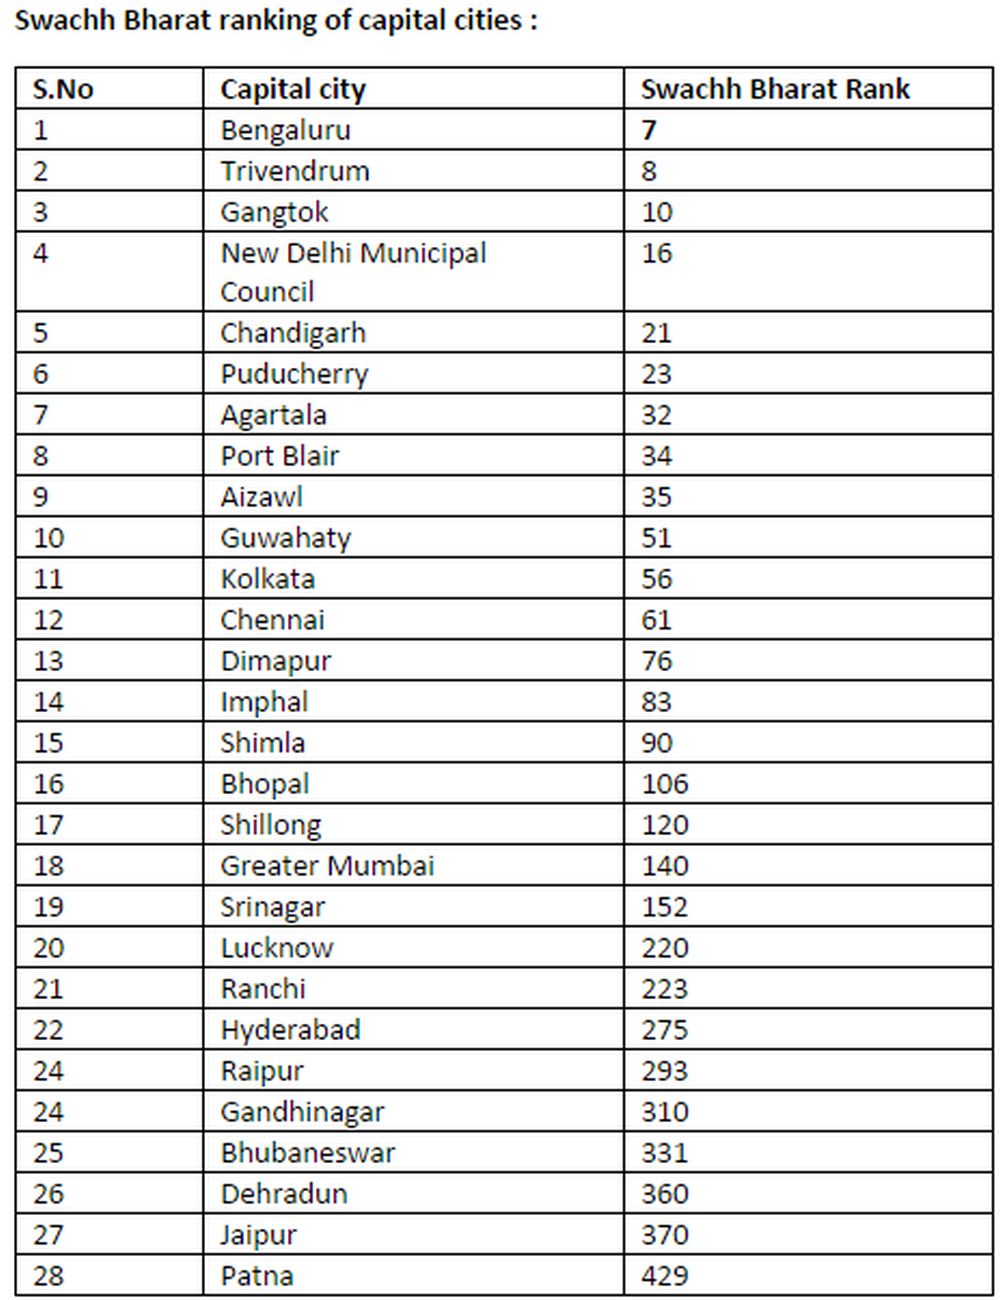 Swachh Bharat ranking